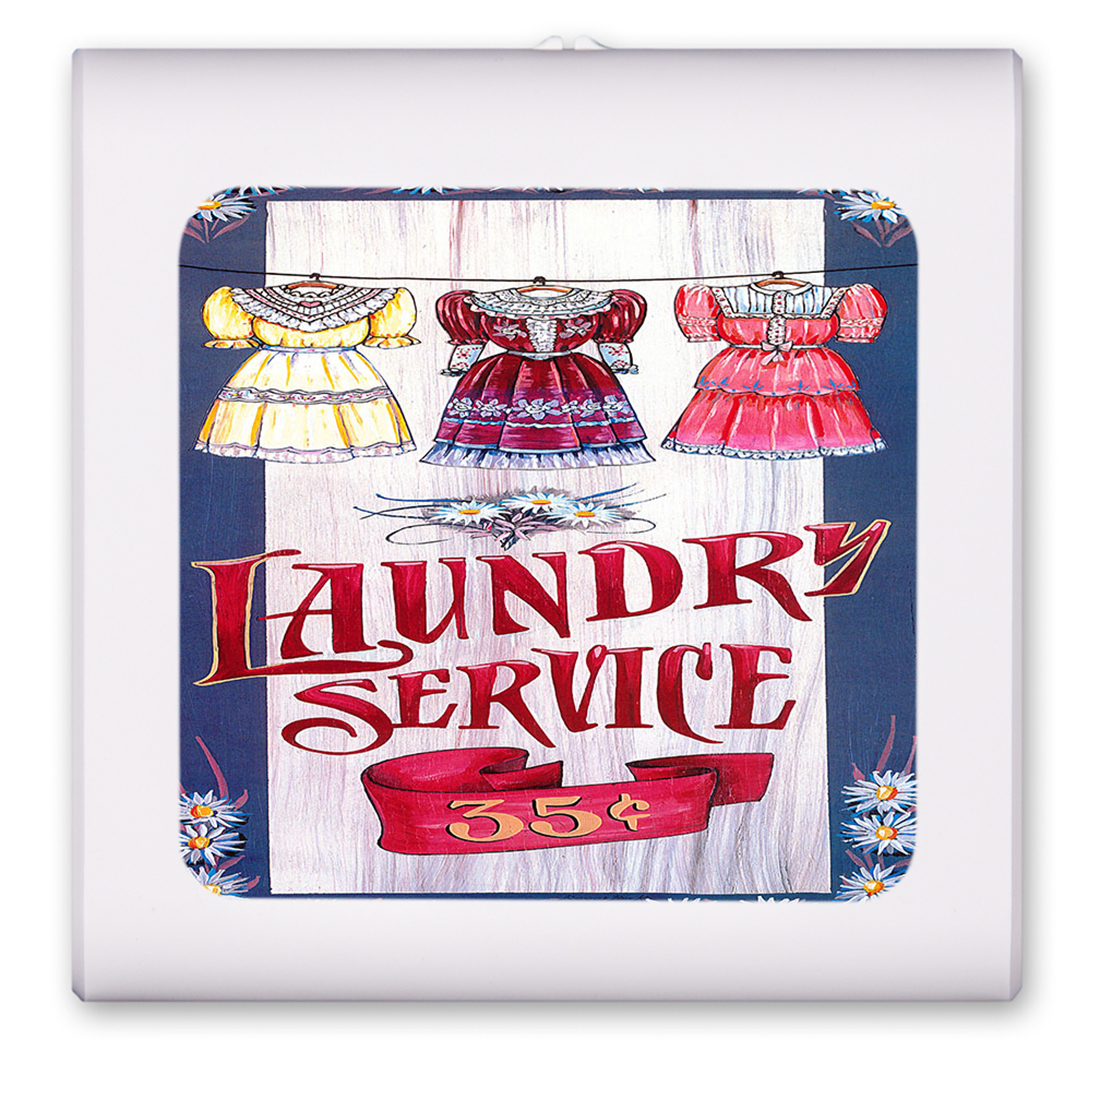 Laundry Service - #442